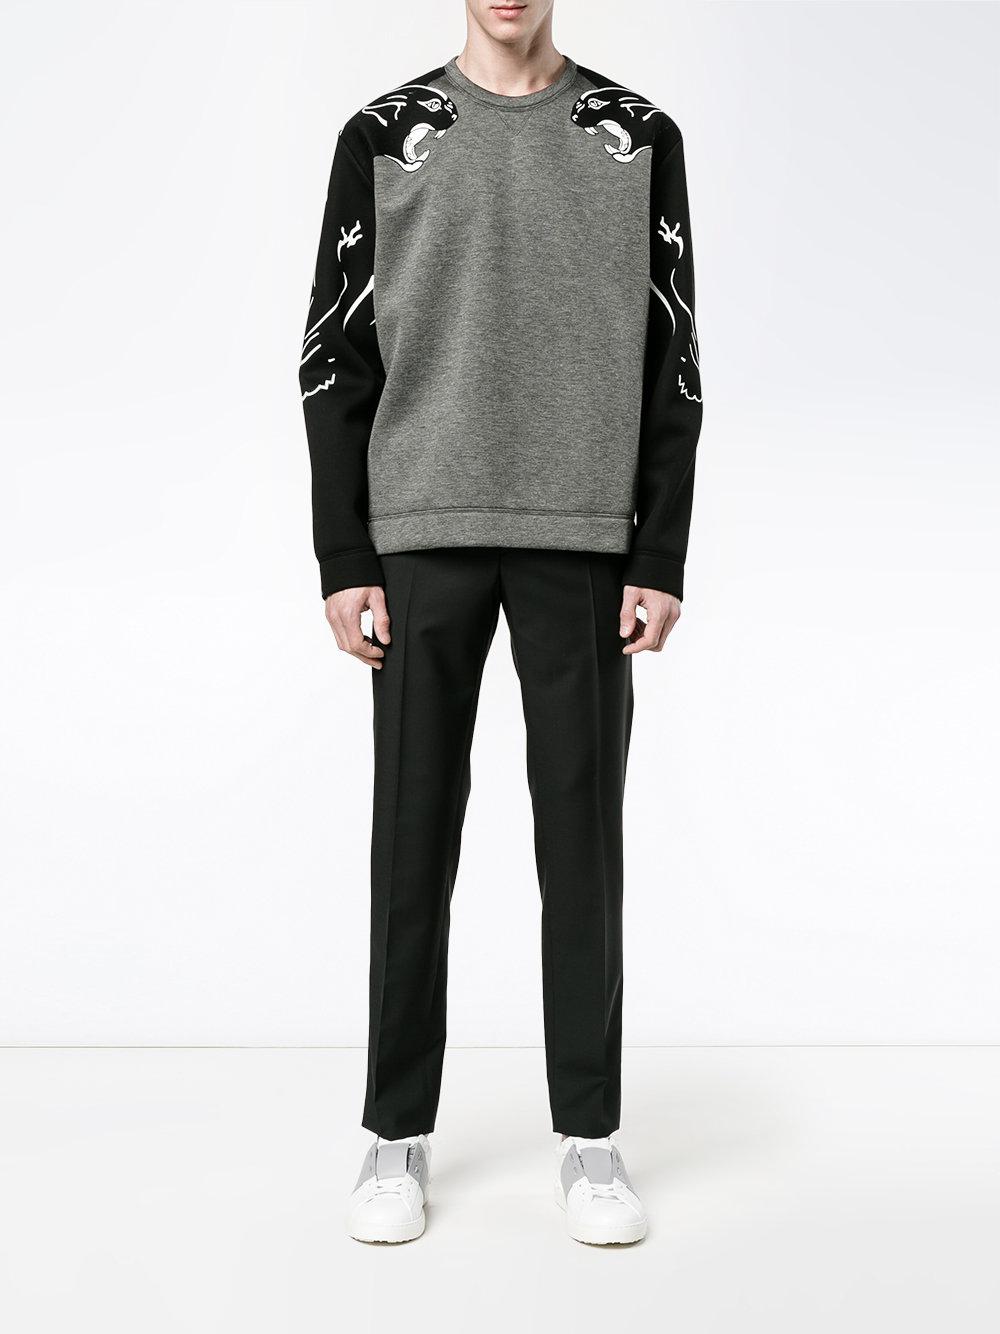 Valentino Cotton Panther Print Sweatshirt in Black for Men - Lyst